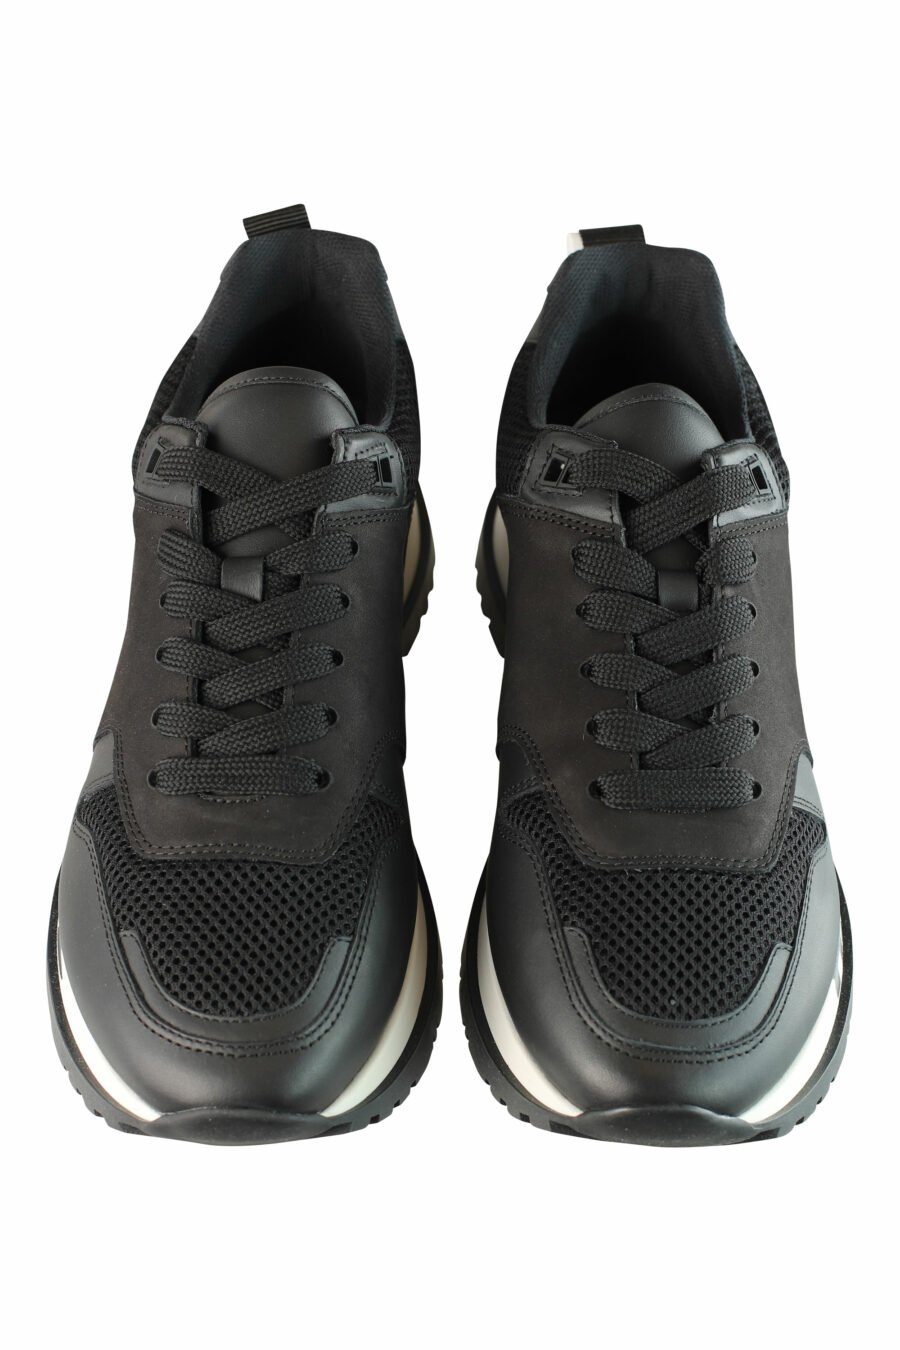 Zapatillas negras "running" con suela blanca con logo negro - IMG 1361